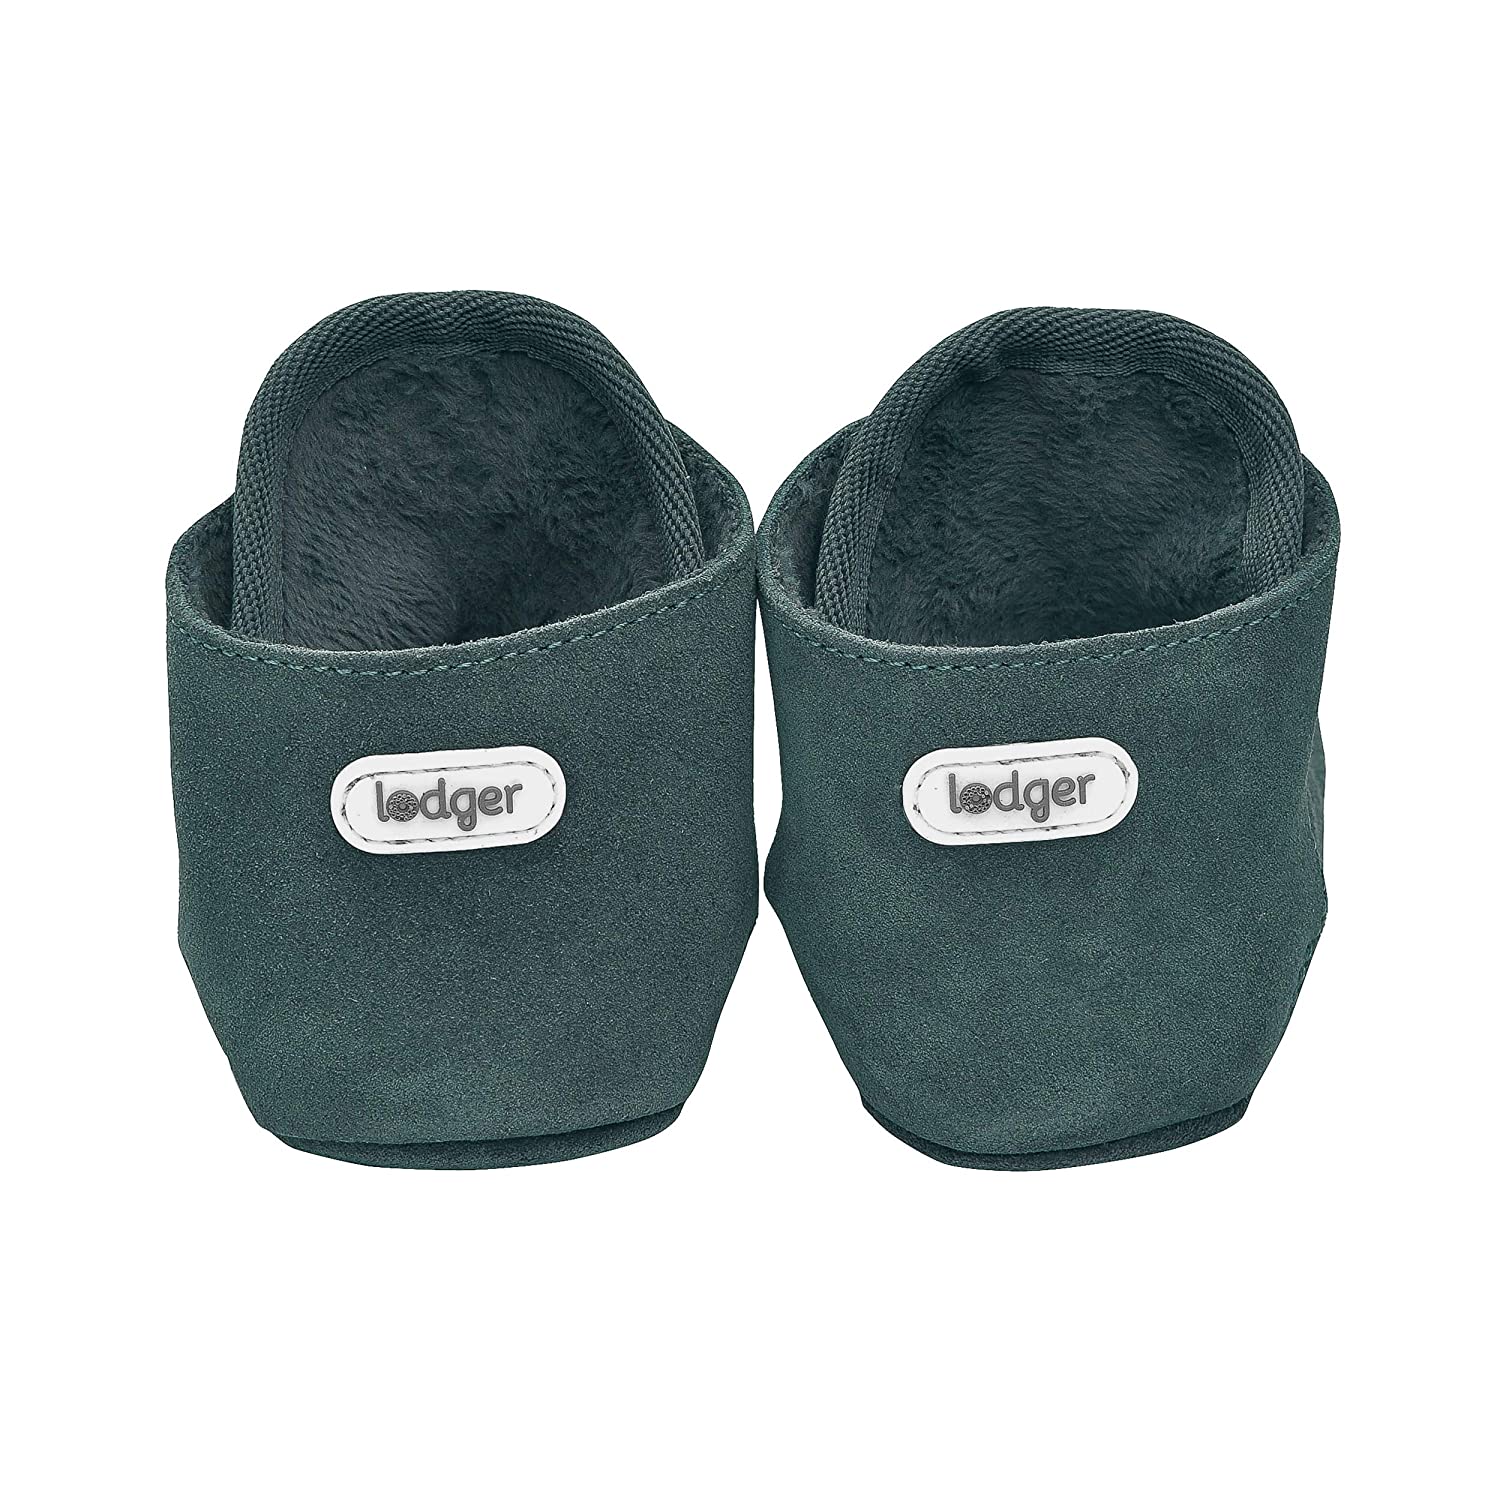 Lodger WKLE1001 Lodger Baby Shoes Walker Dark Green 12-15 Months Green